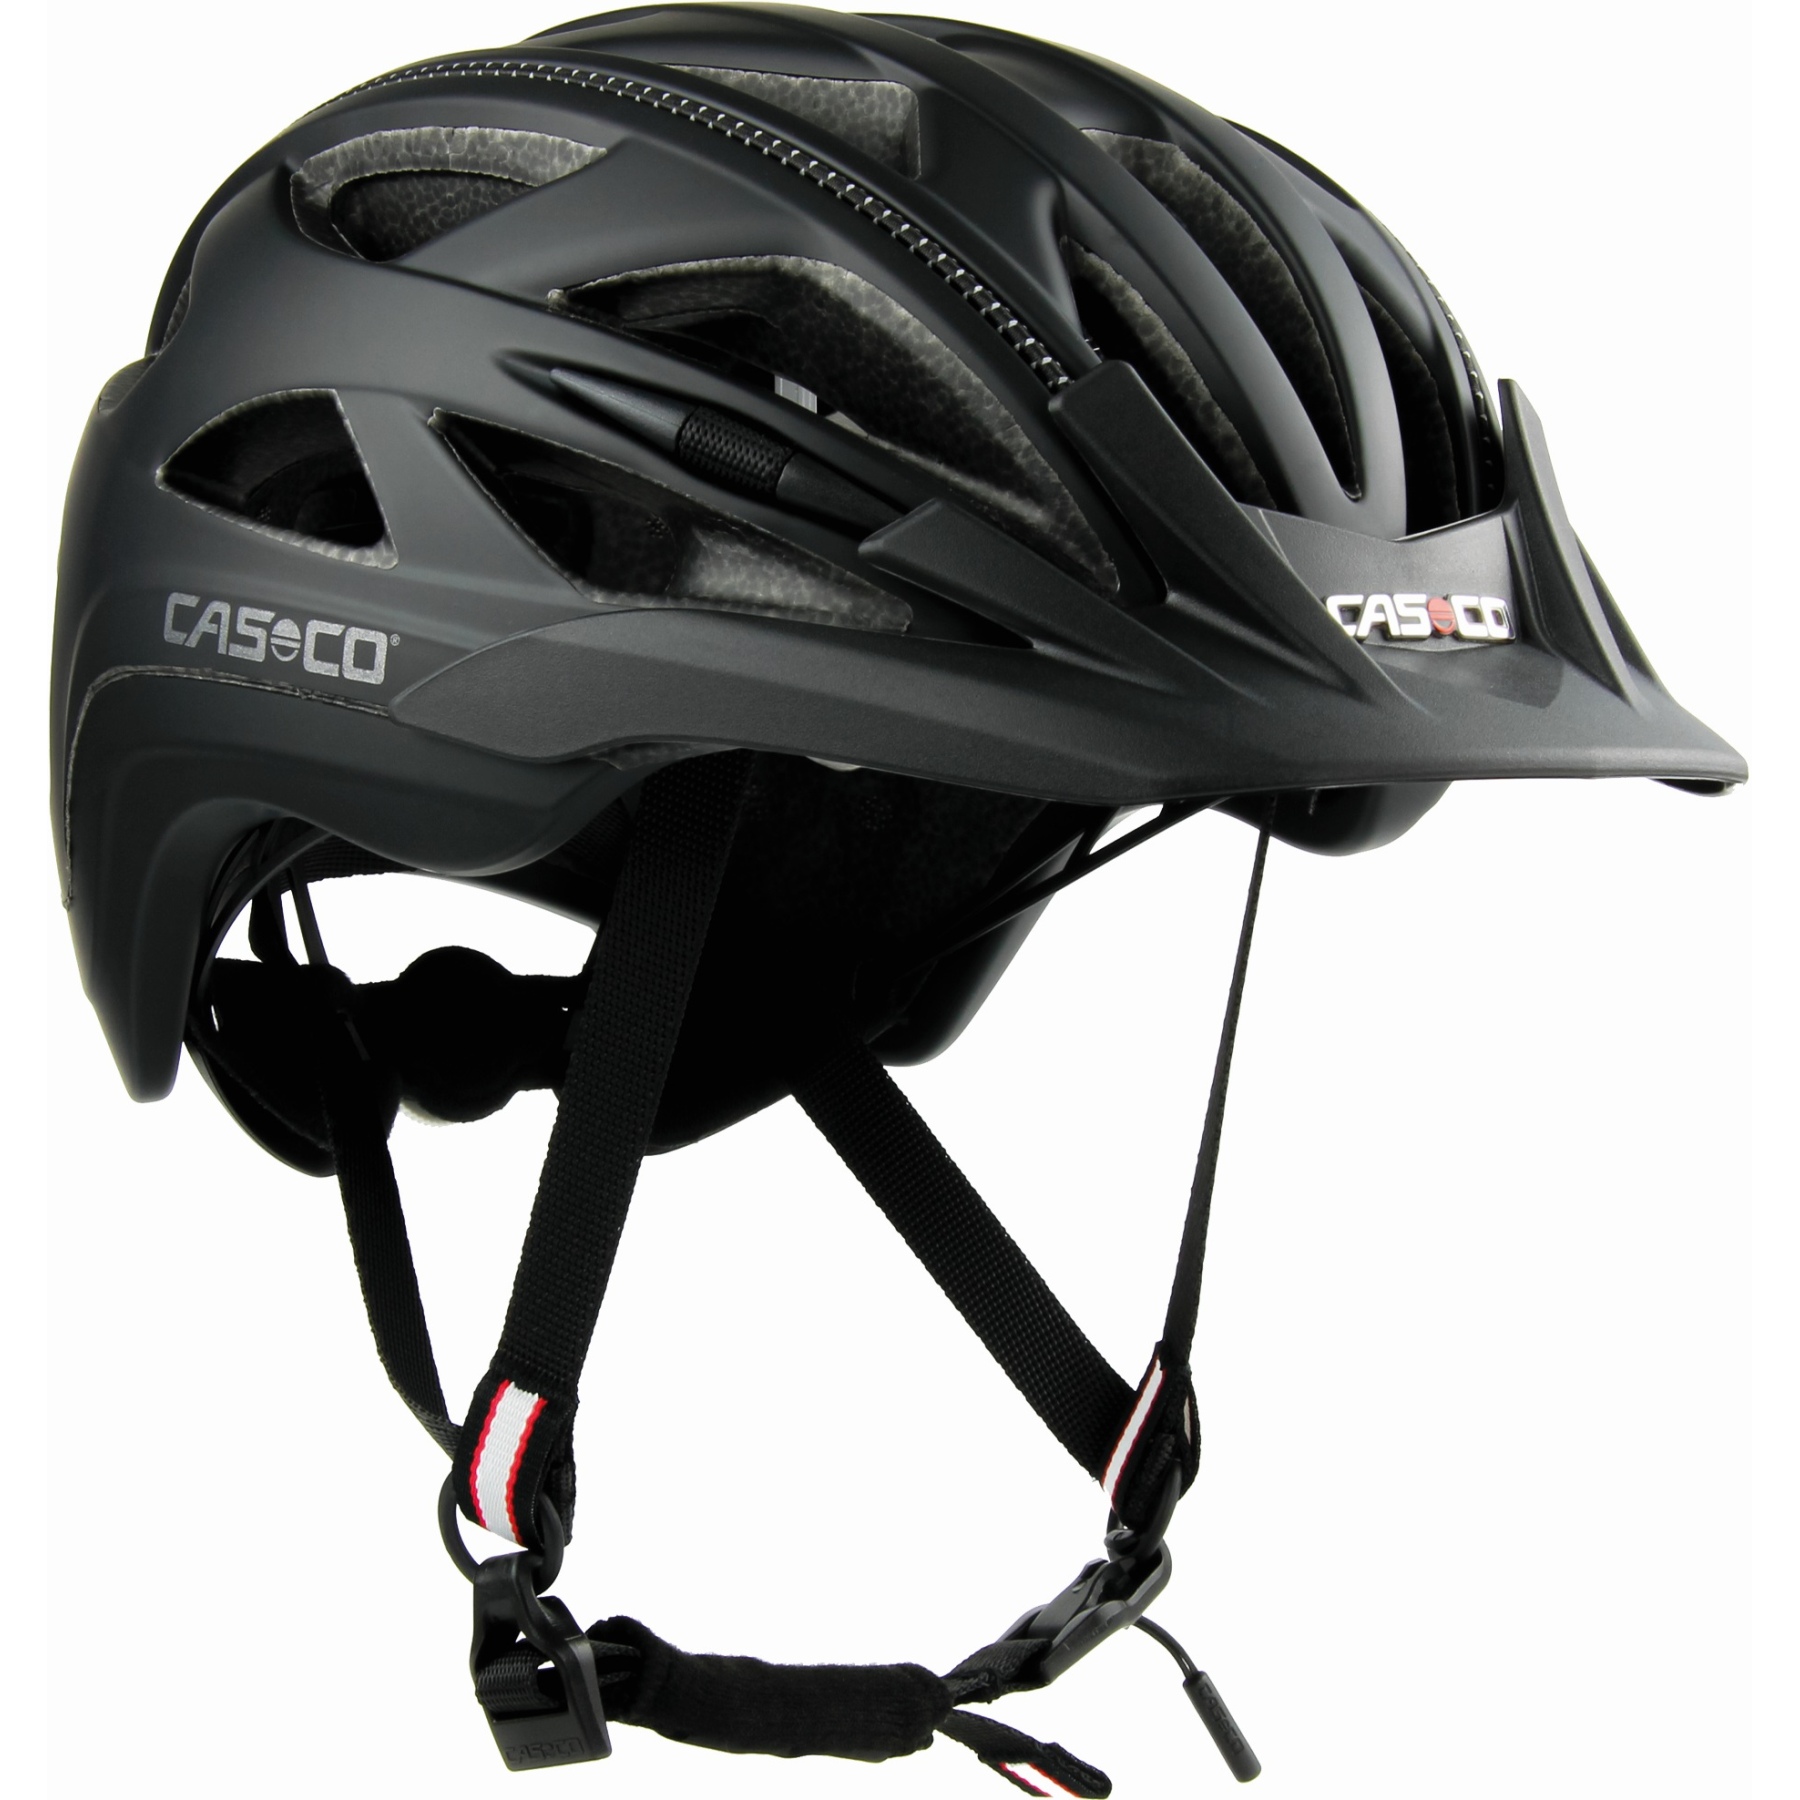 Productfoto van Casco Activ 2 Helm - black matt